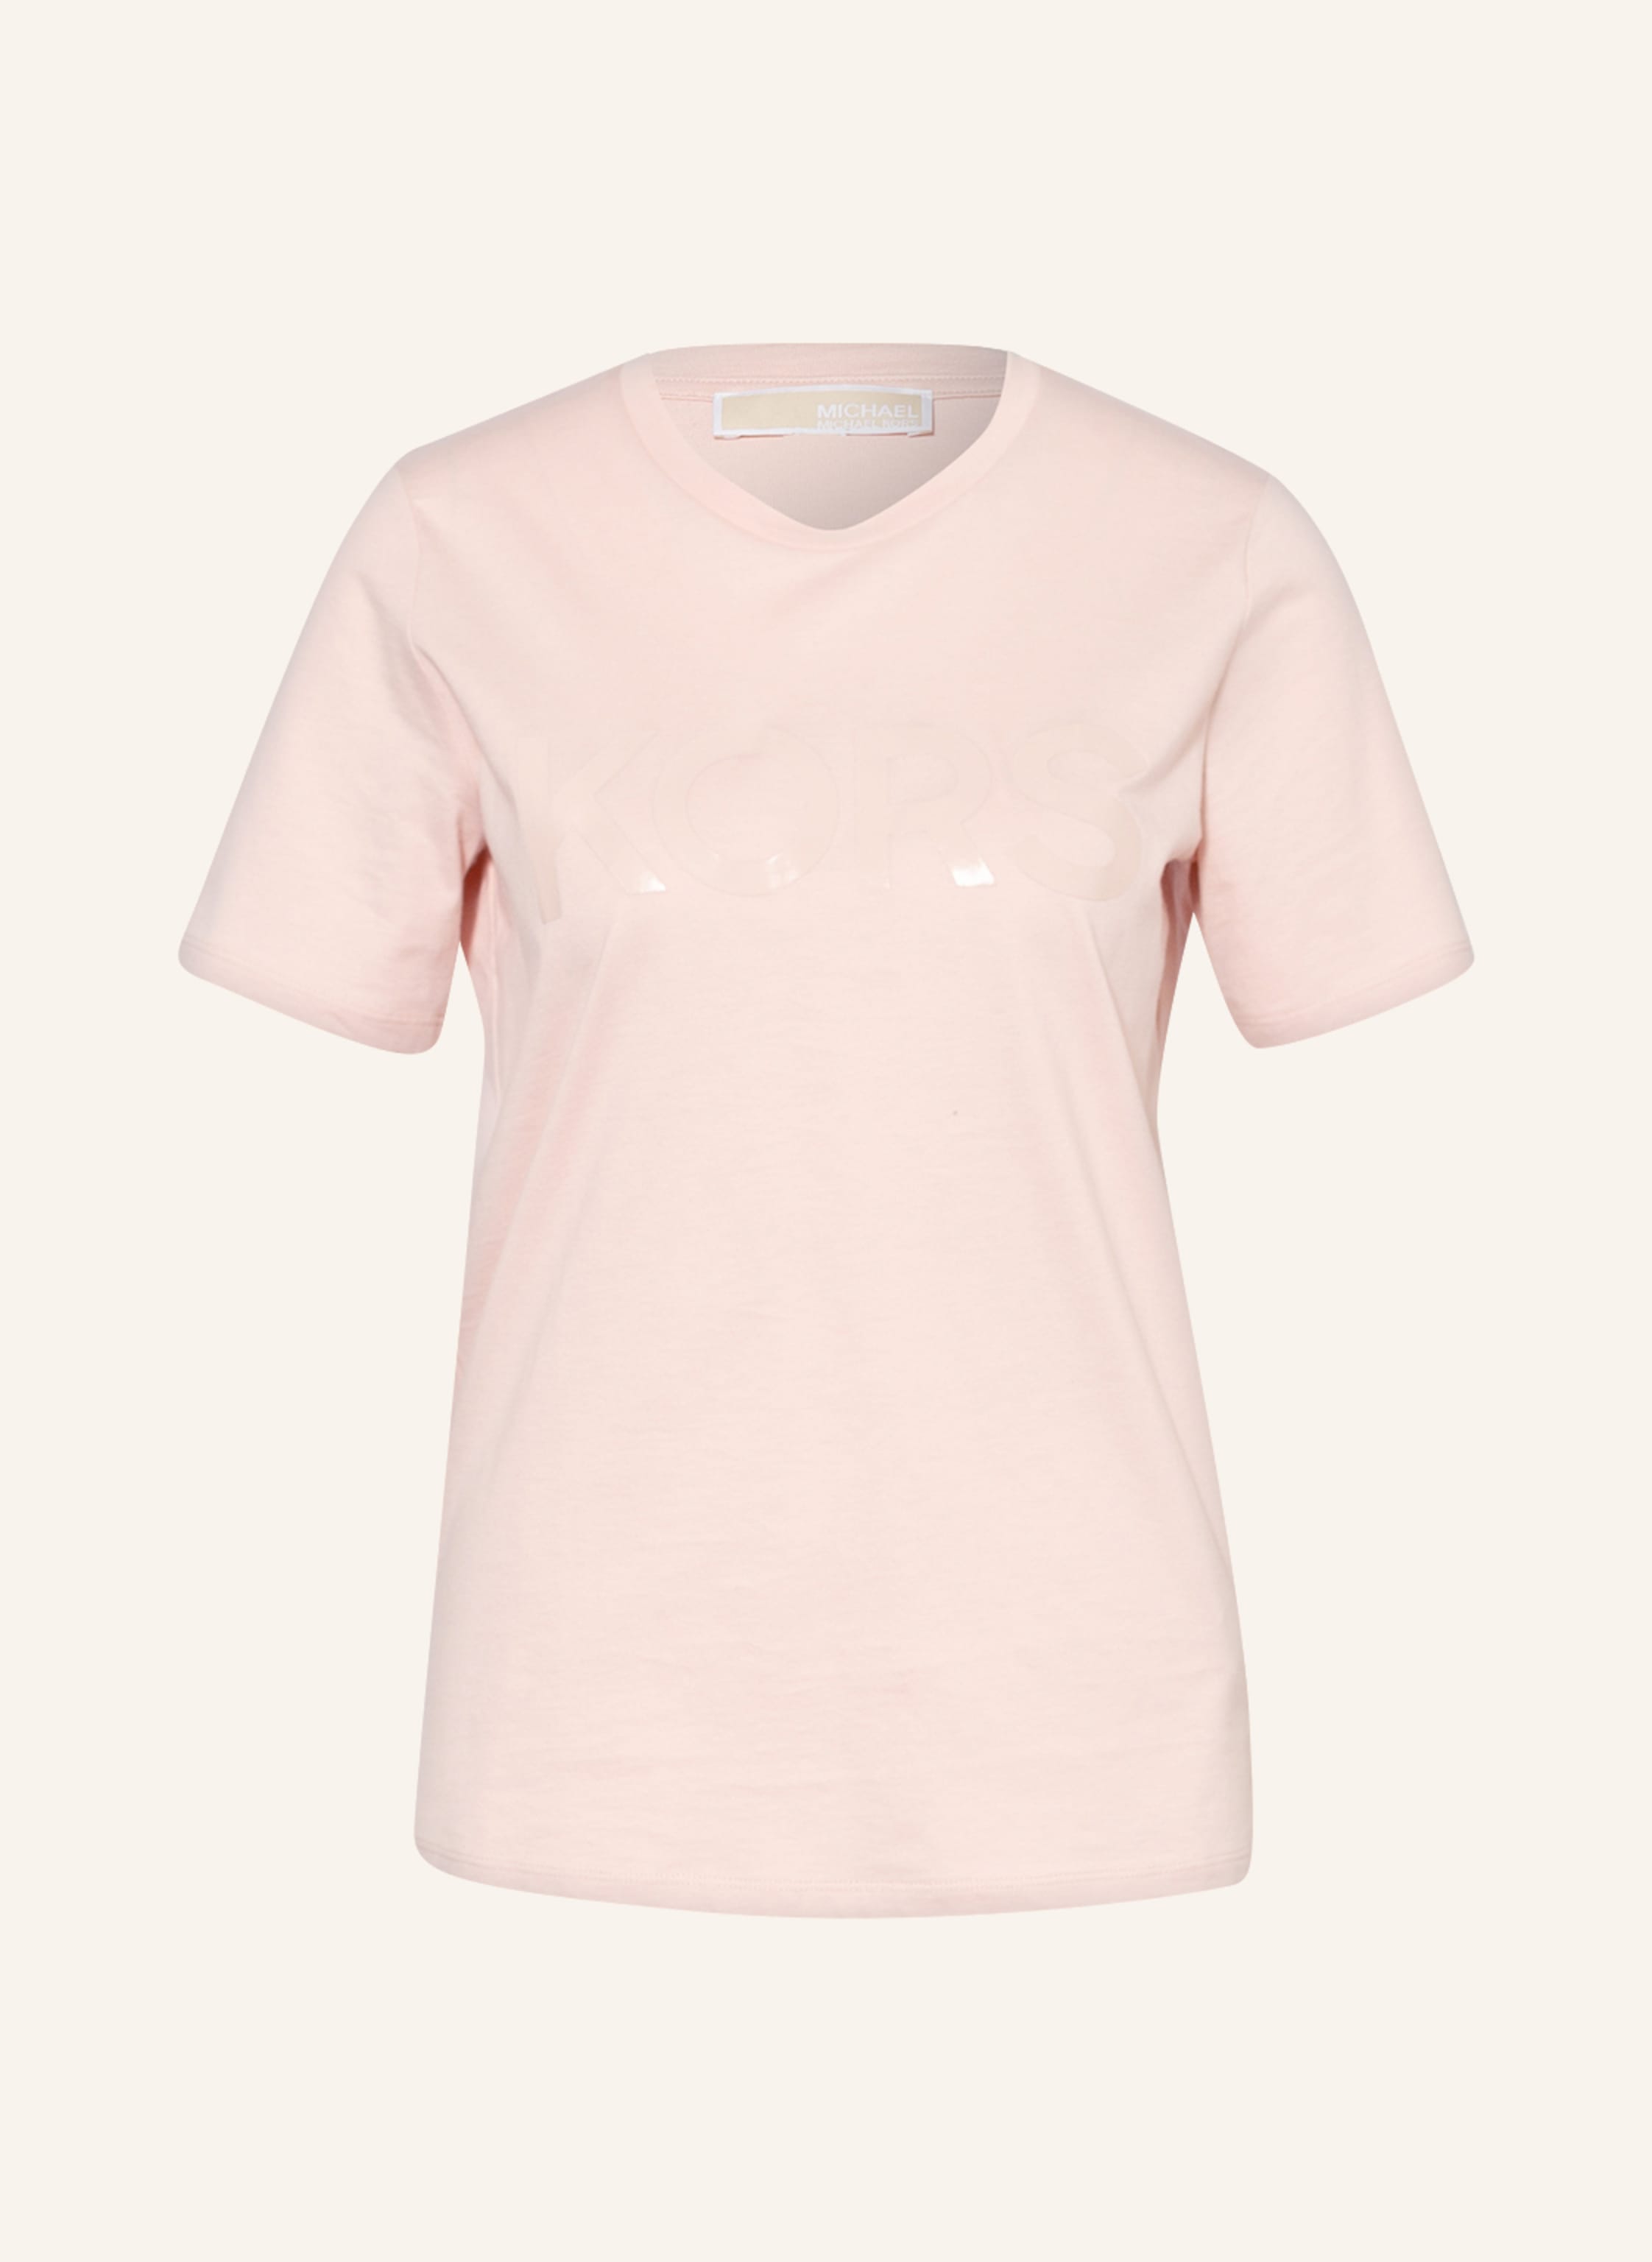 MICHAEL KORS T-shirt in light pink | Breuninger